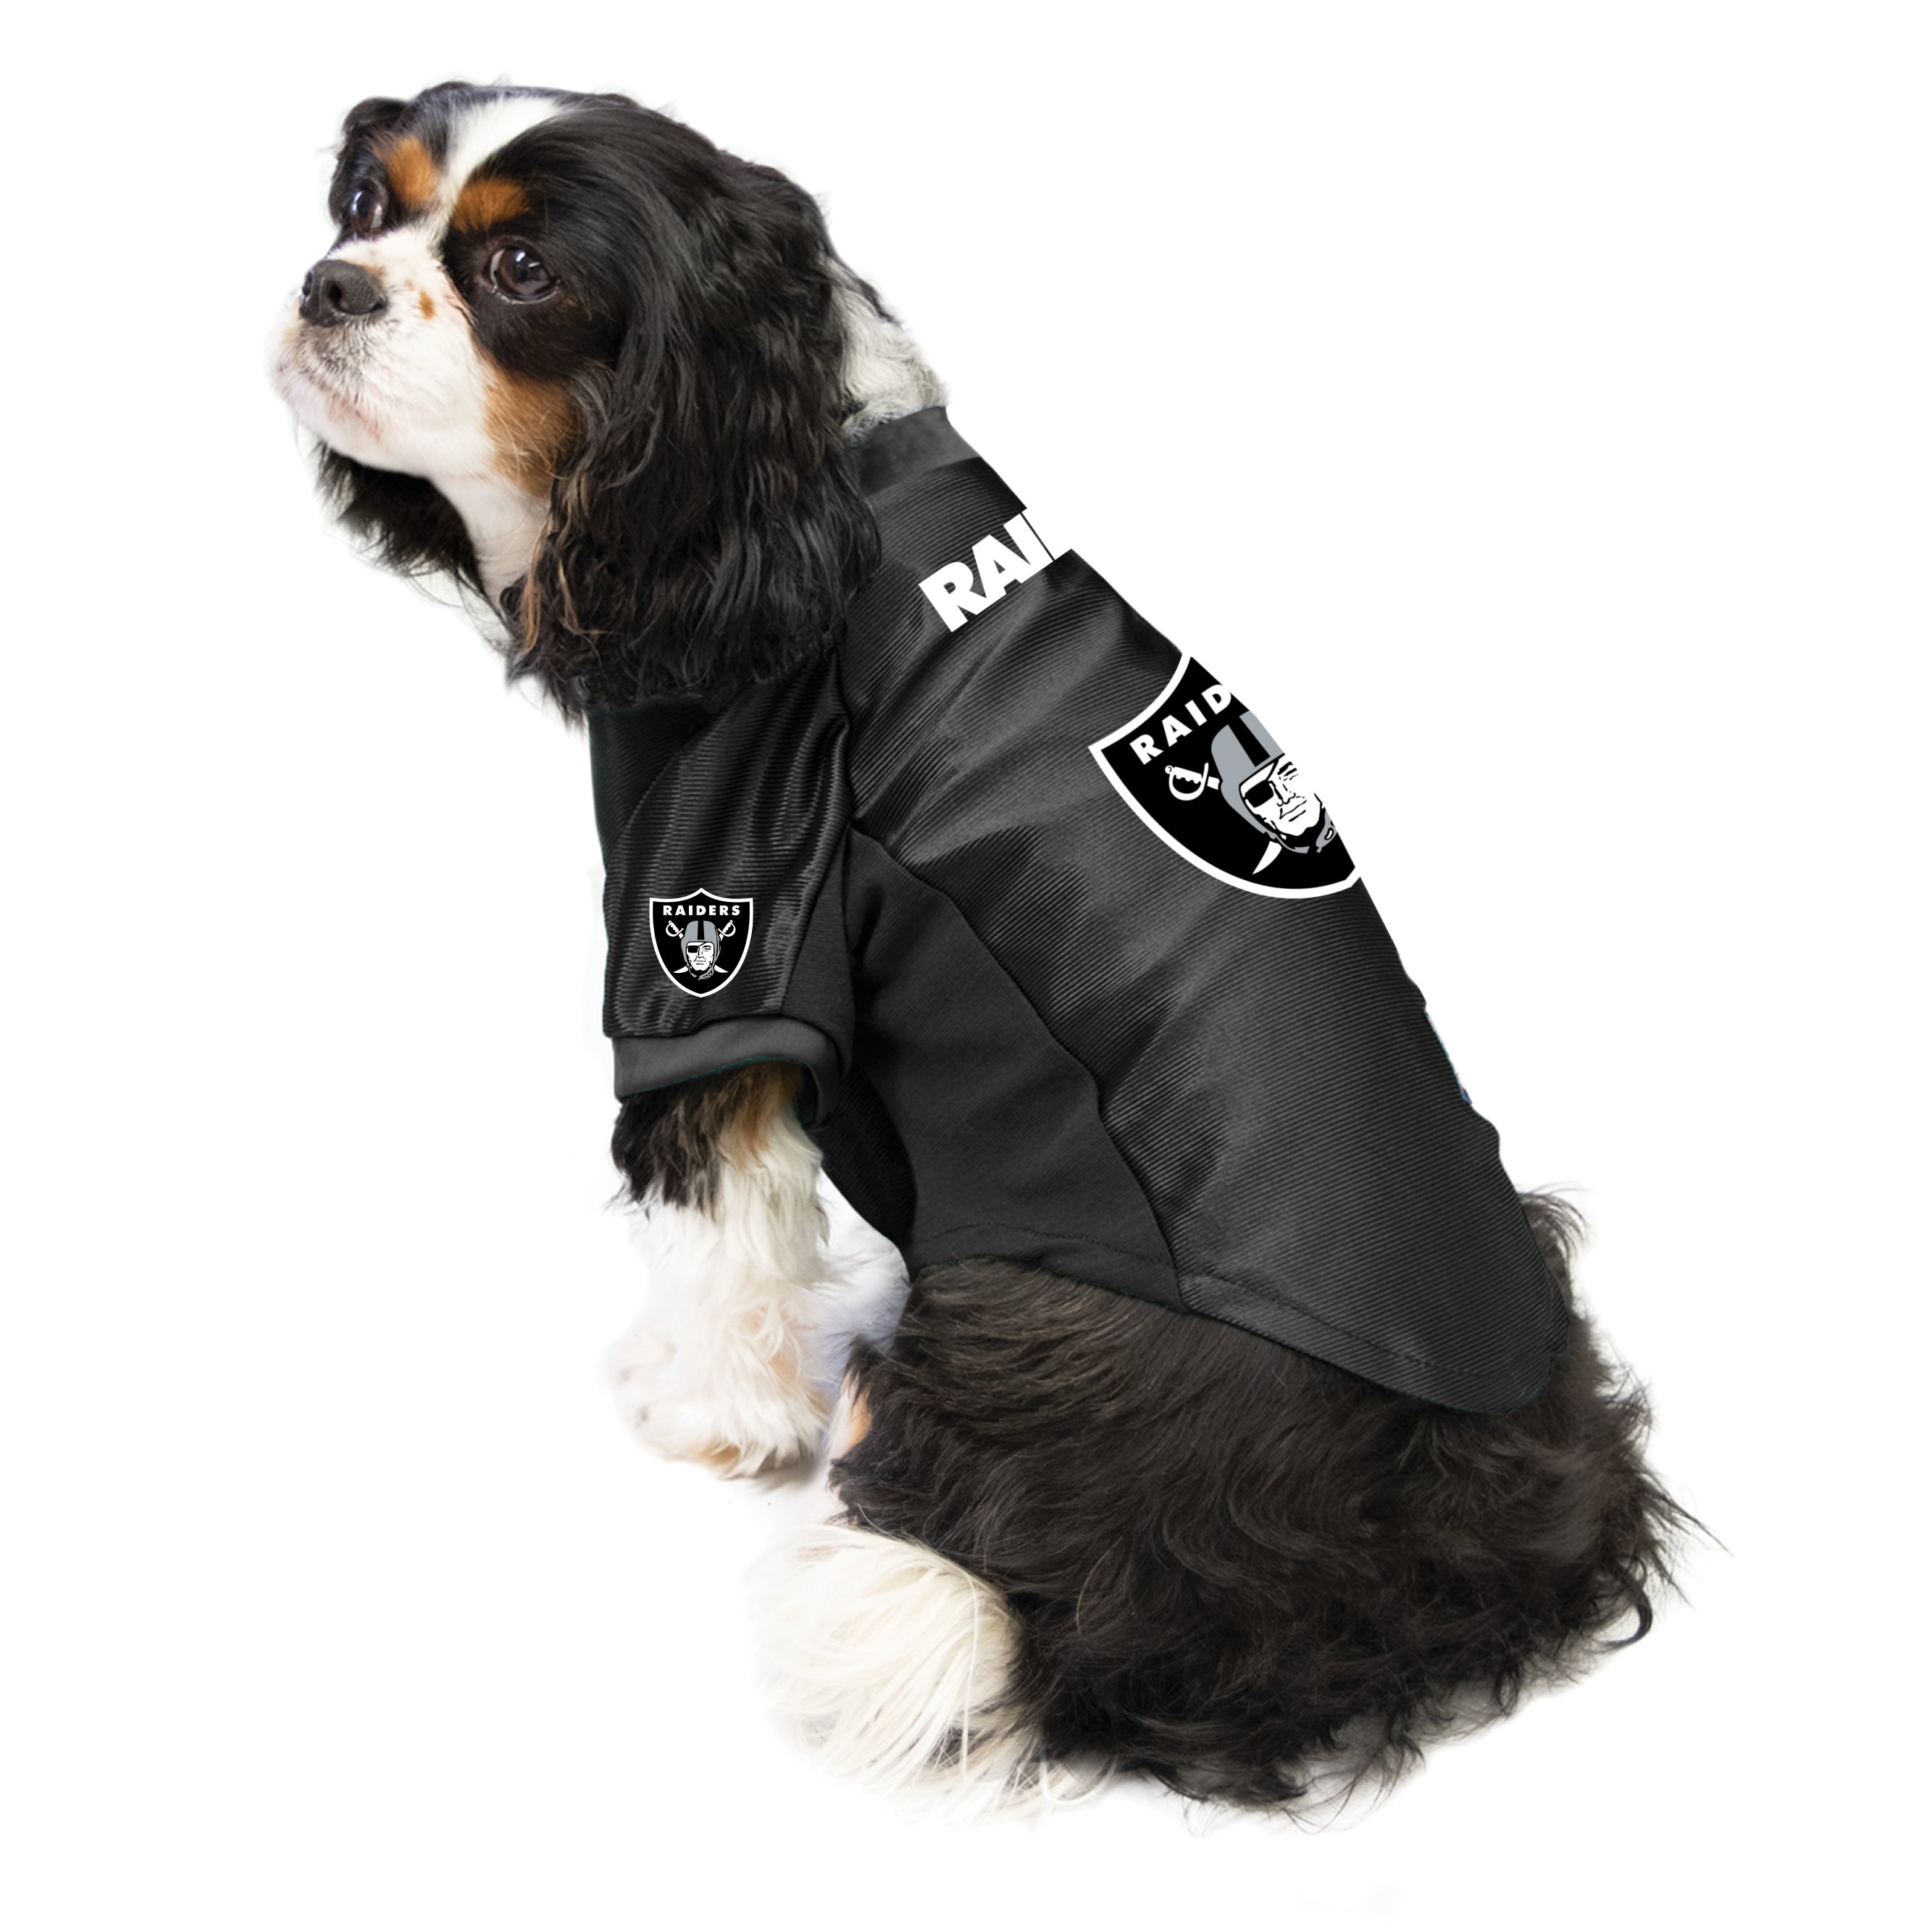 Oakland Raiders Pet Premium Jersey - XL